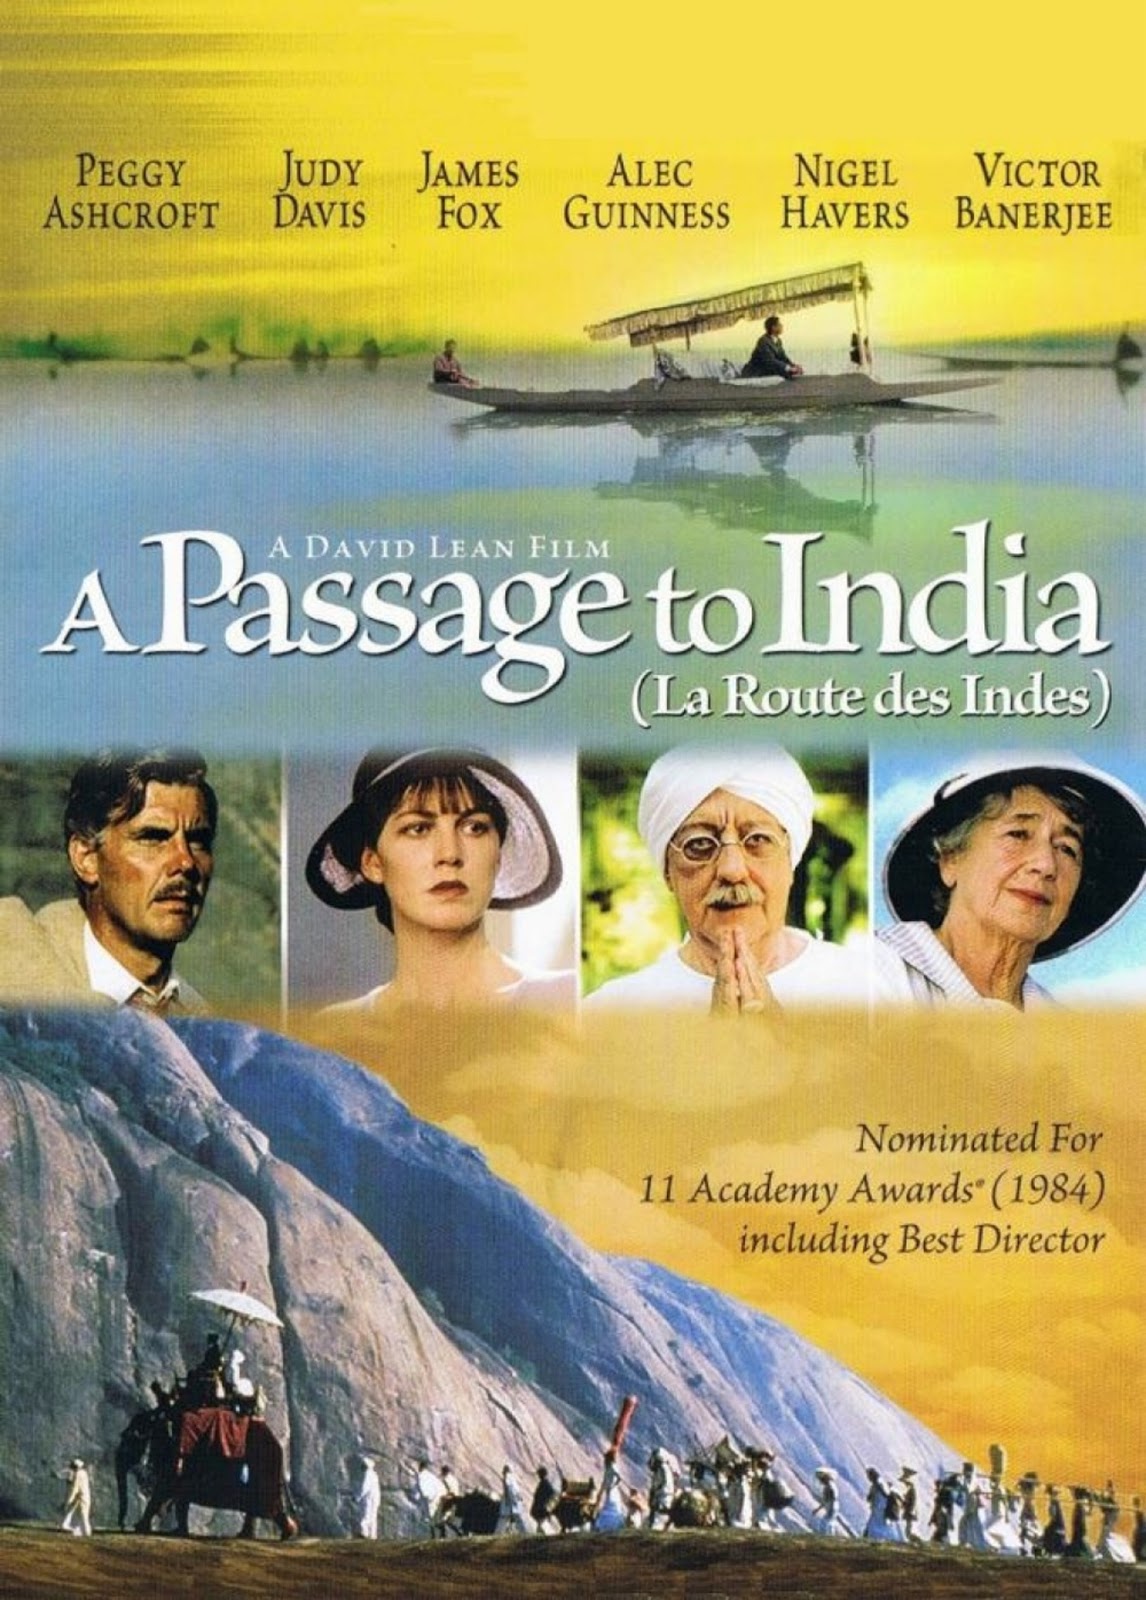 travel to india movie